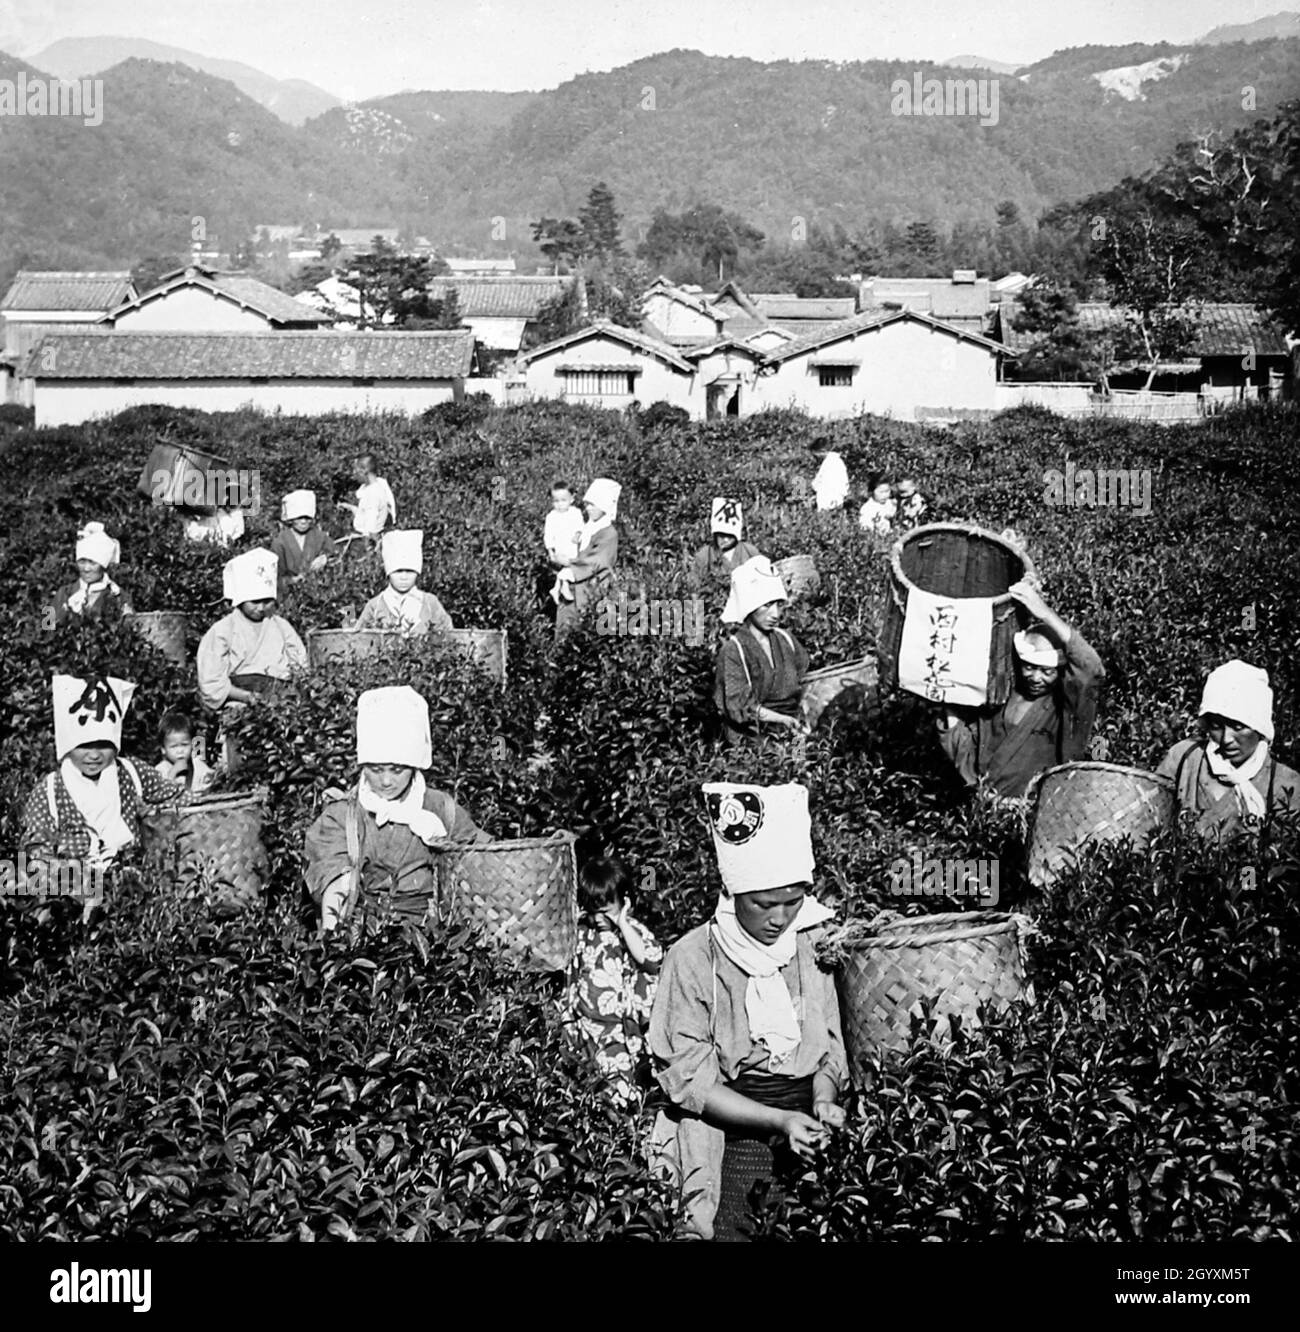 Tea pickers, China, Victorian period Stock Photo